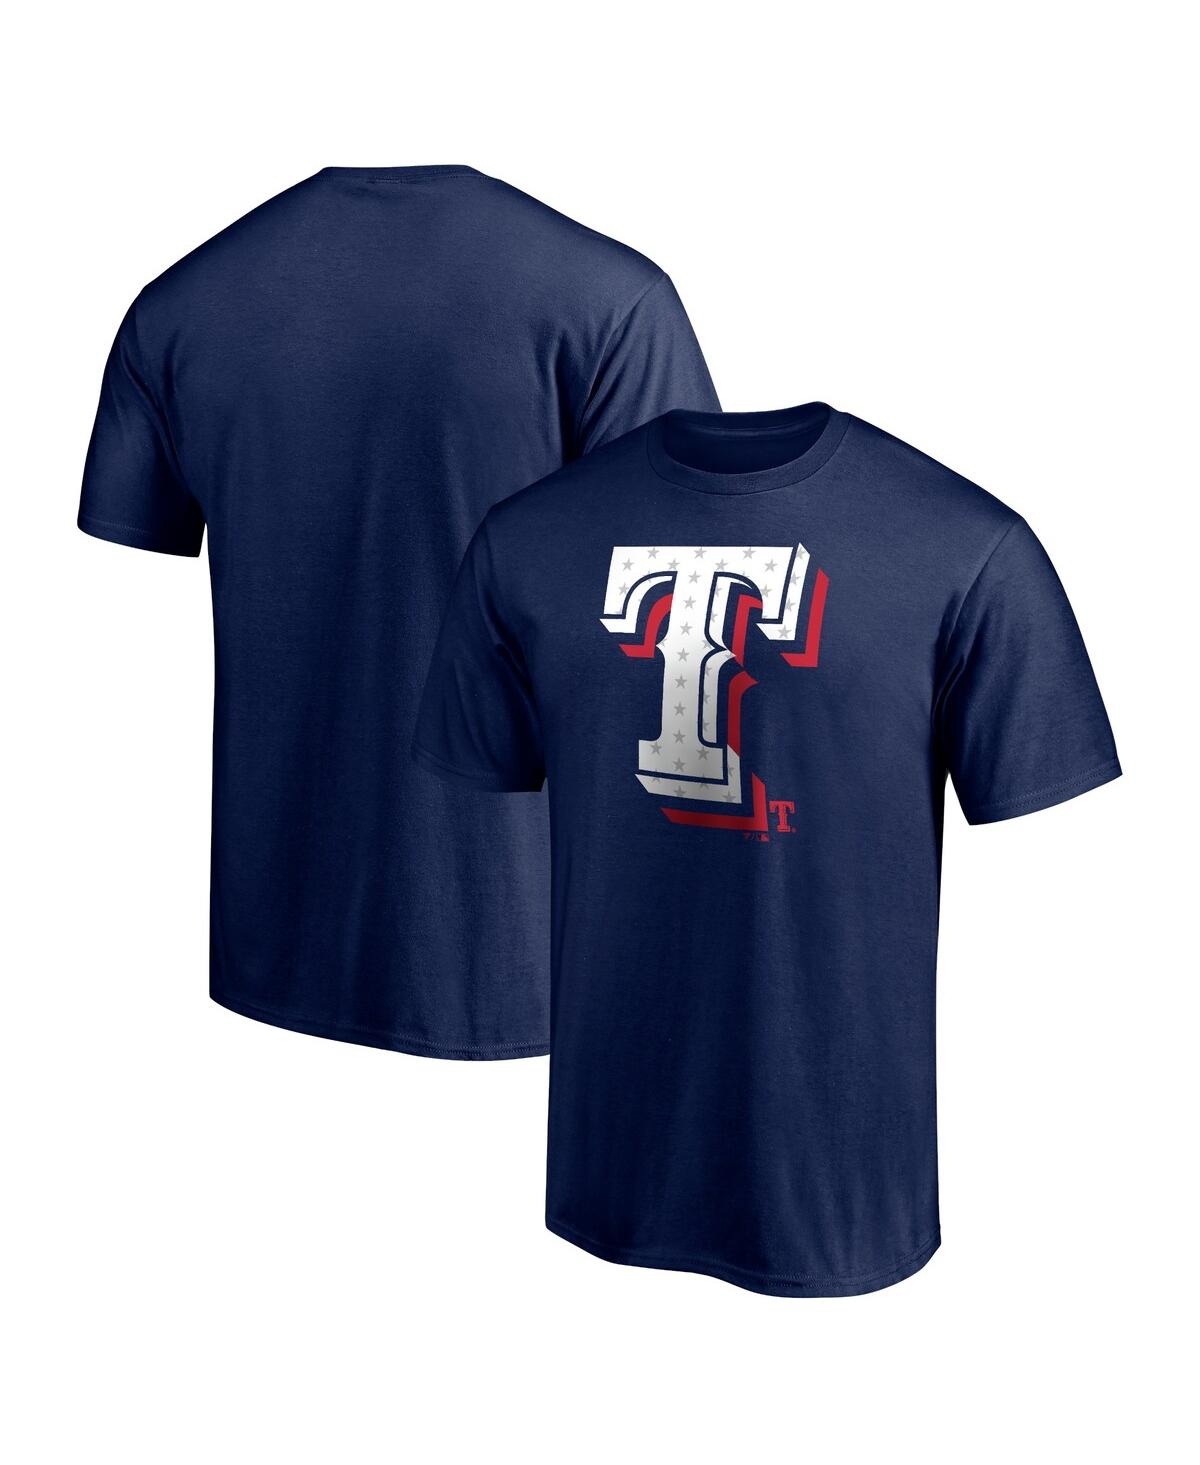 Fanatics Men's  Navy Texas Rangers Red White And Team T-shirt